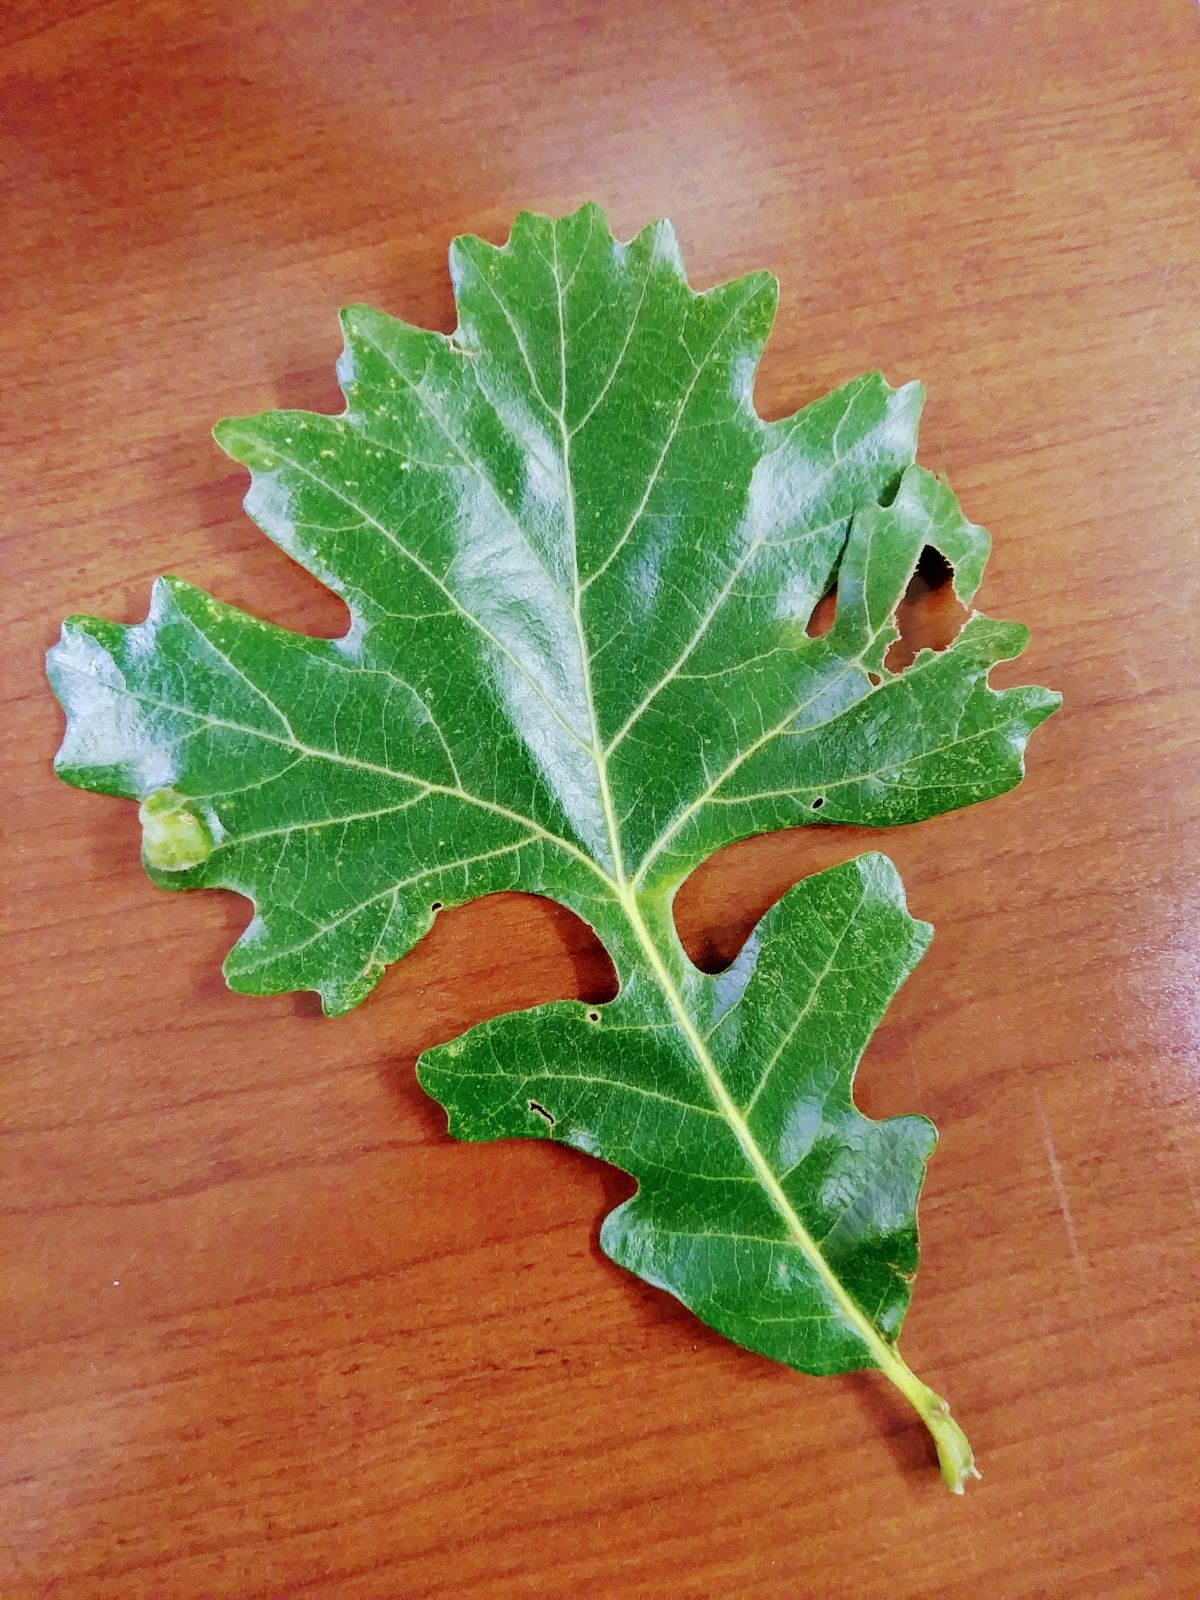 Burr oak tree leaf